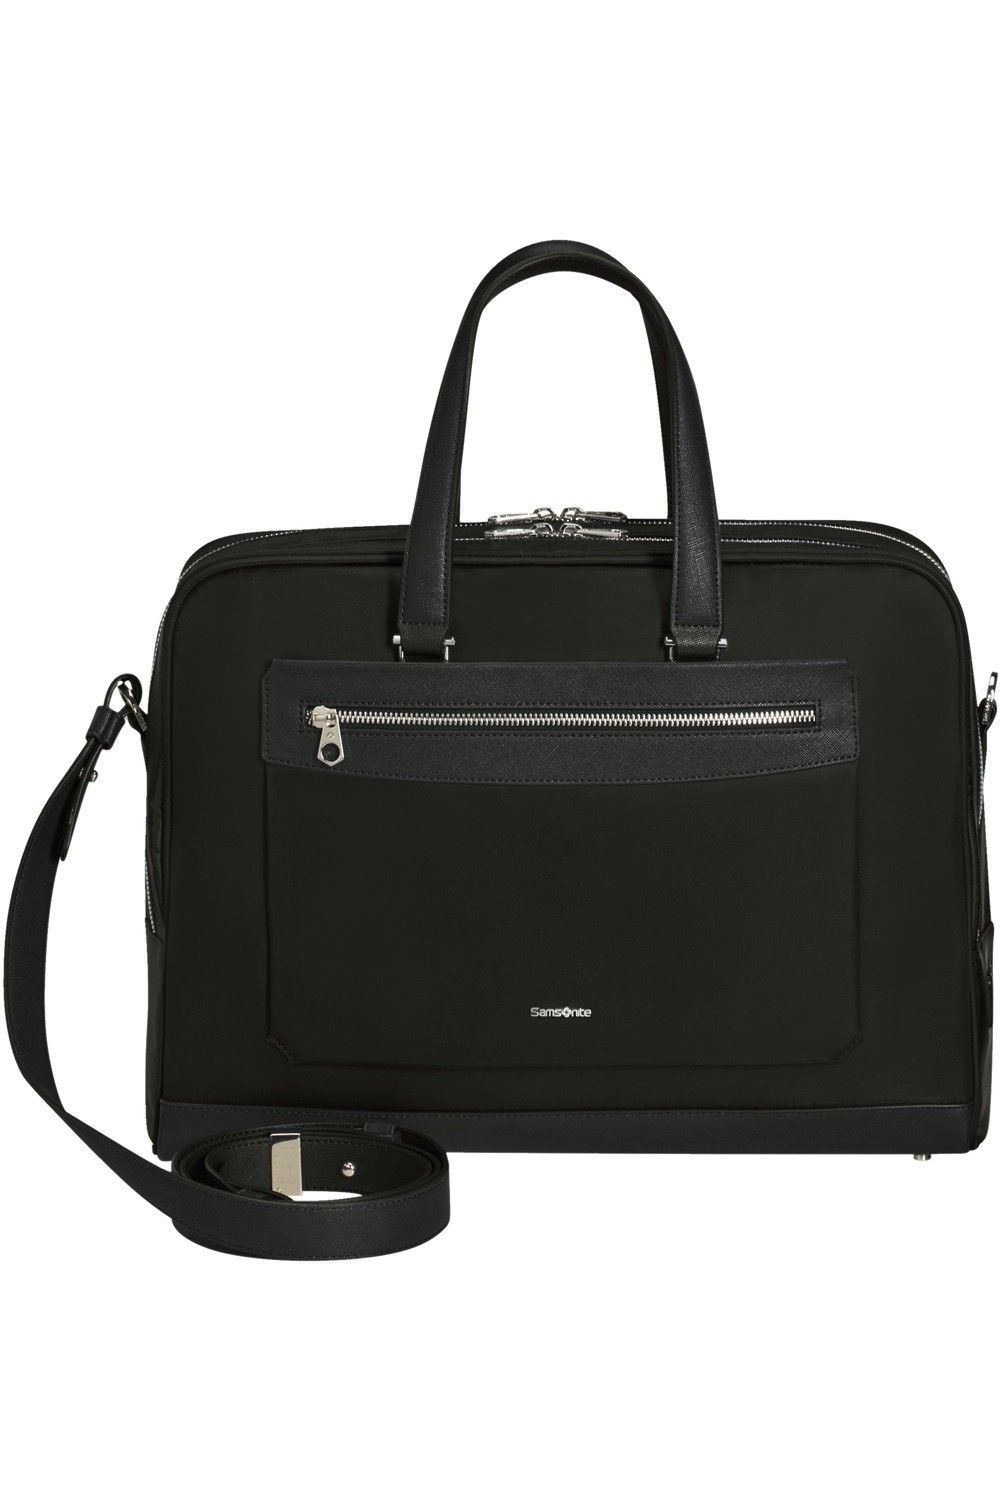 Samsonite Zalia 2 15.6 inch laptop handbag